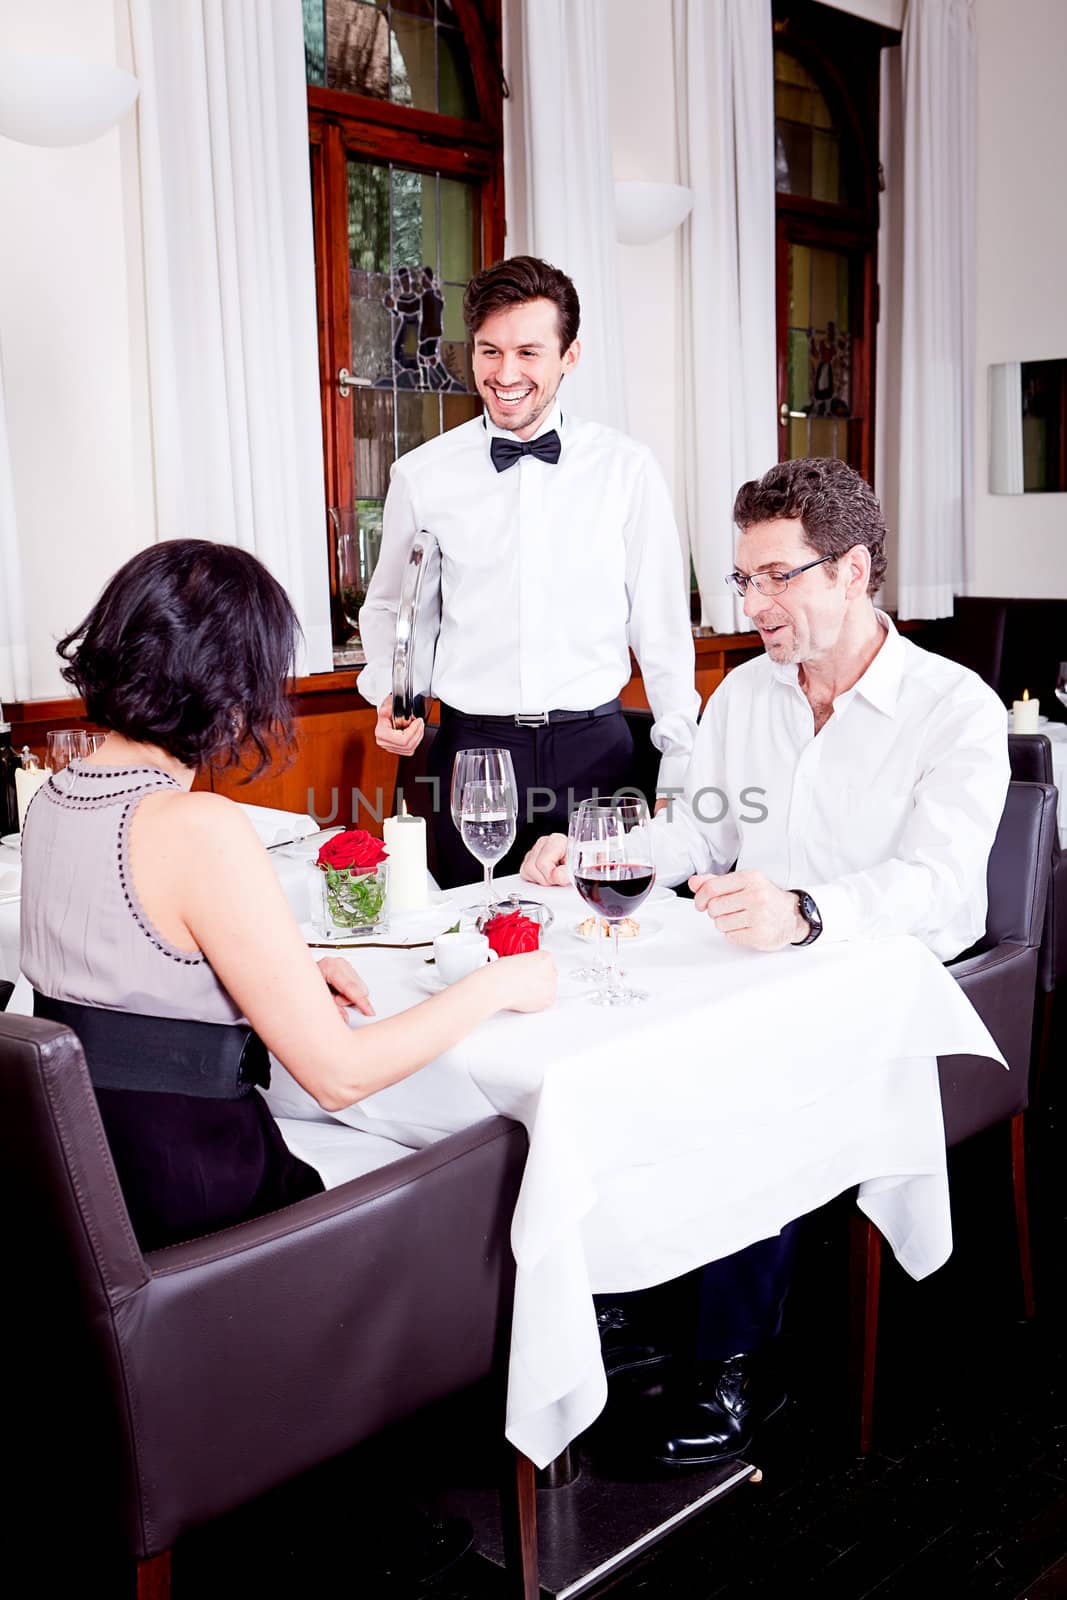 waiter serve fresh espresso for happy couple  by juniart